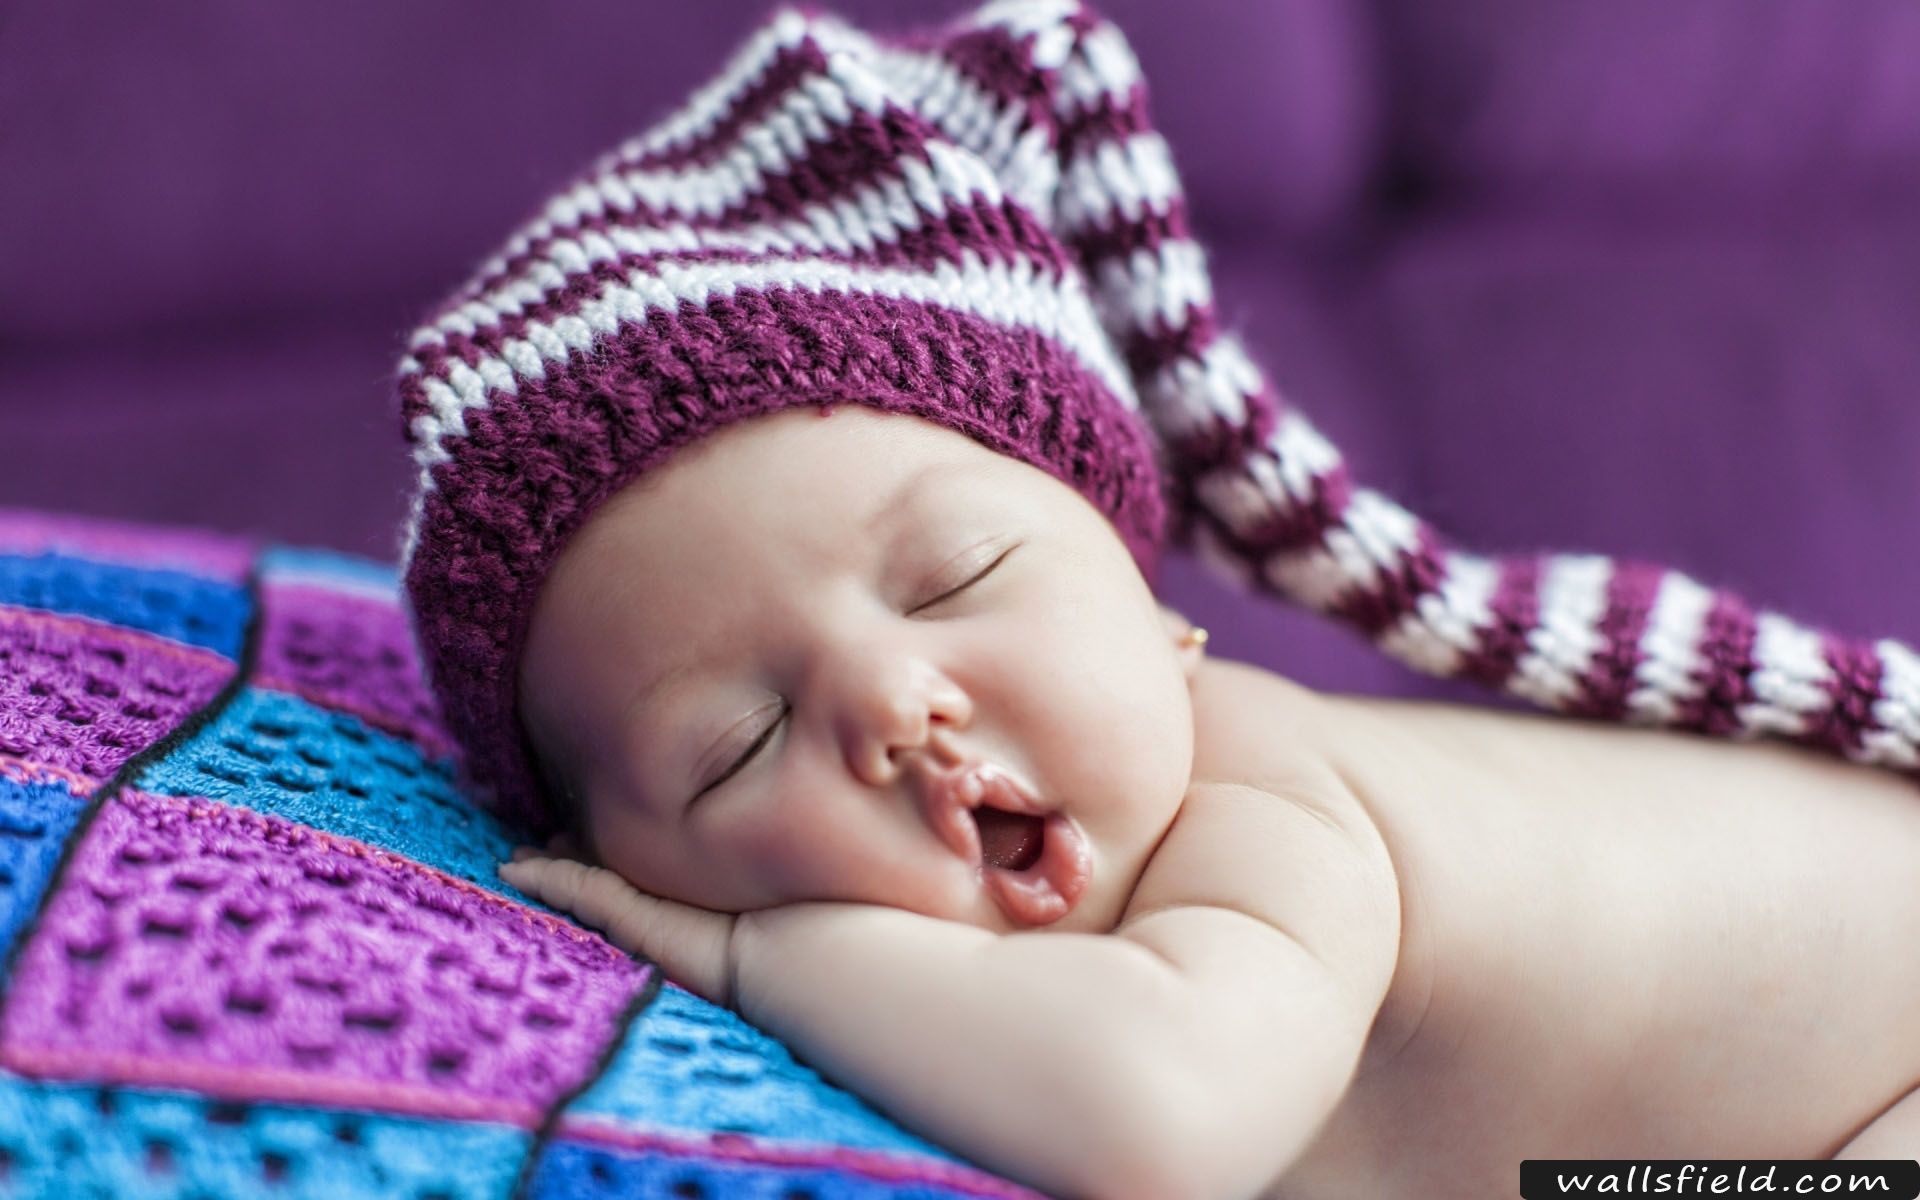 Cute Sleeping Baby.com. Free HD Wallpaper. Cute baby wallpaper, Newborn baby sleep, How to fall asleep